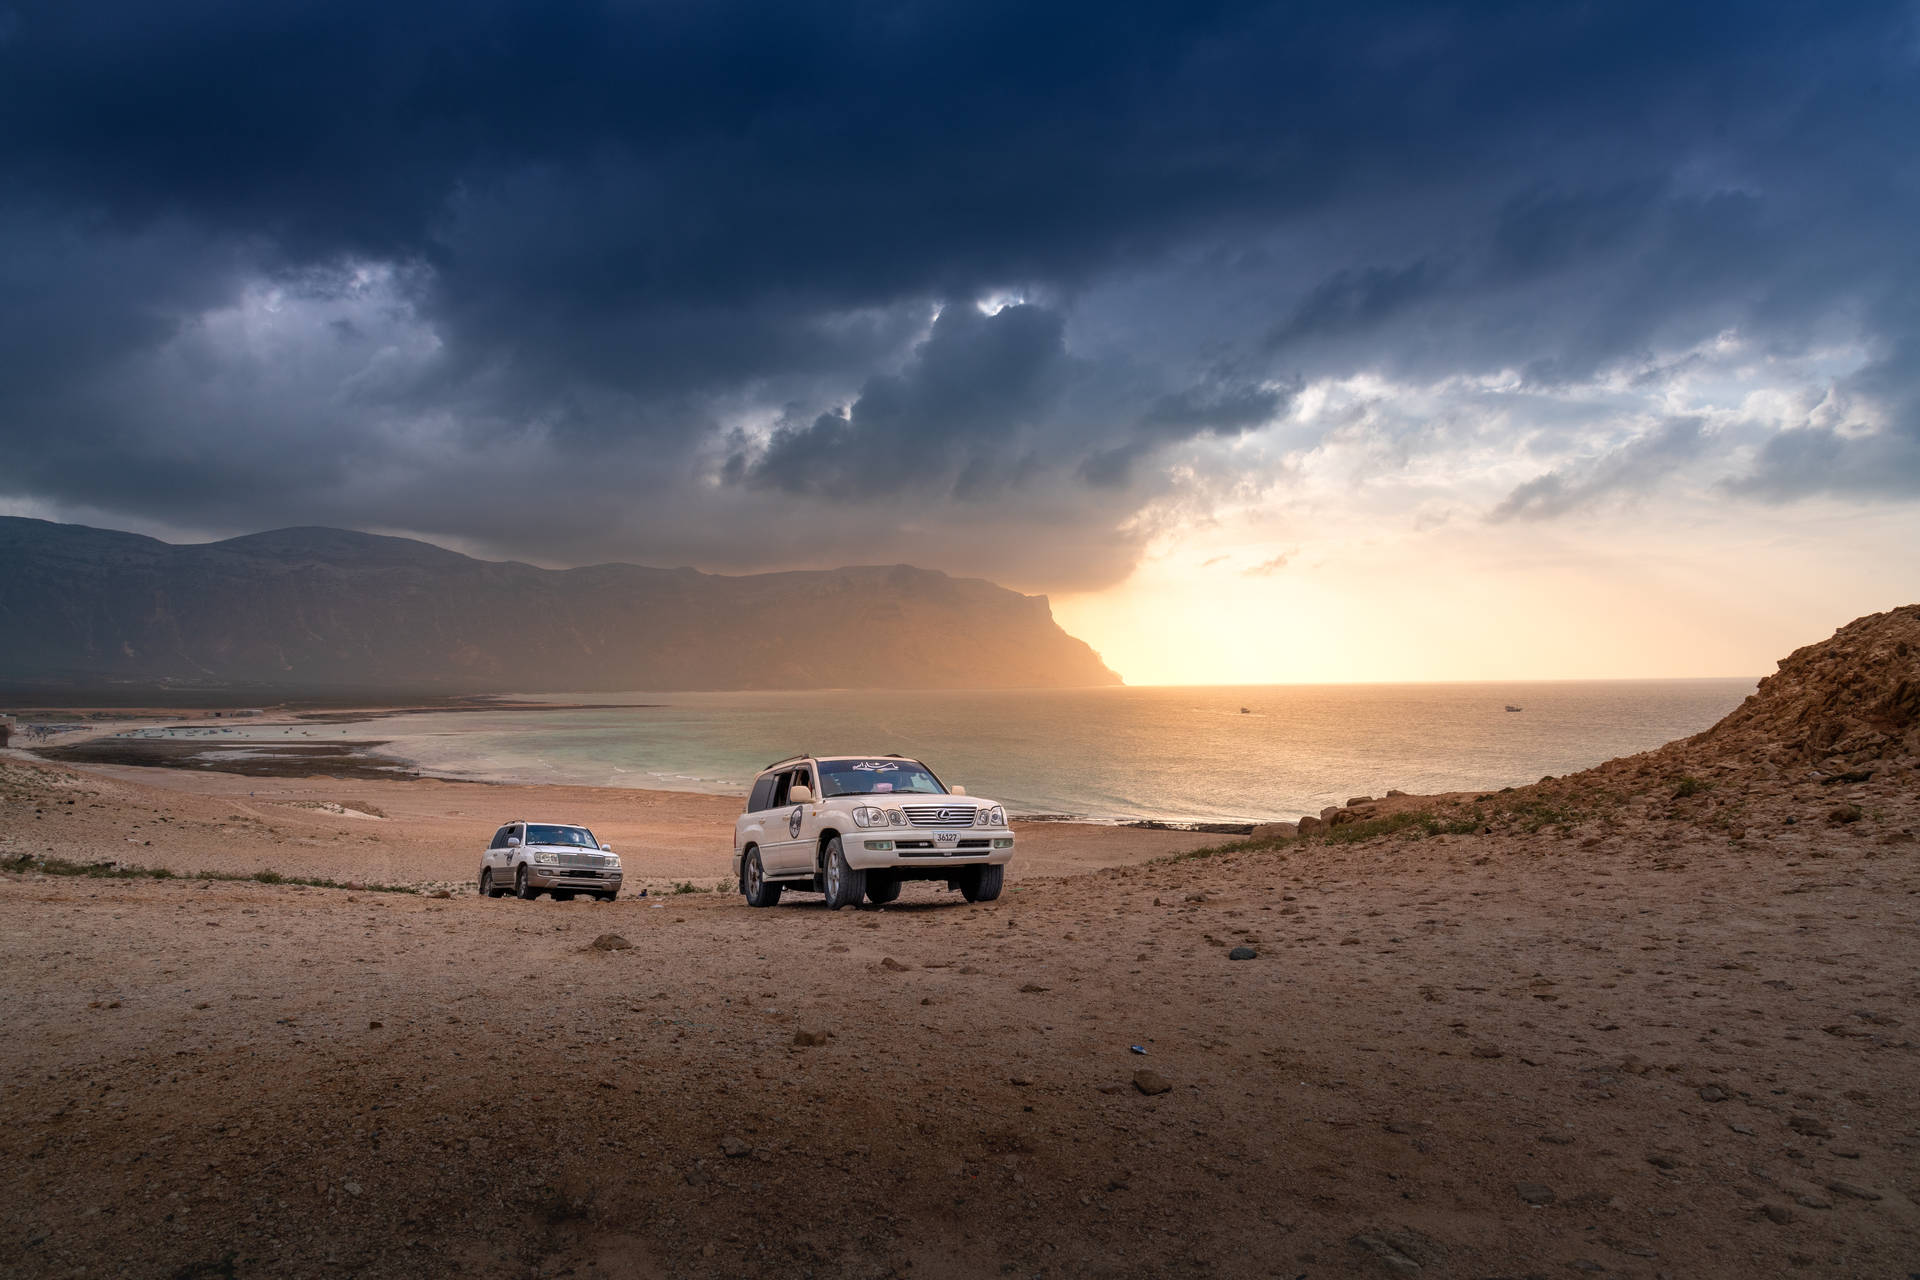 Yemen Landscape Drive Background